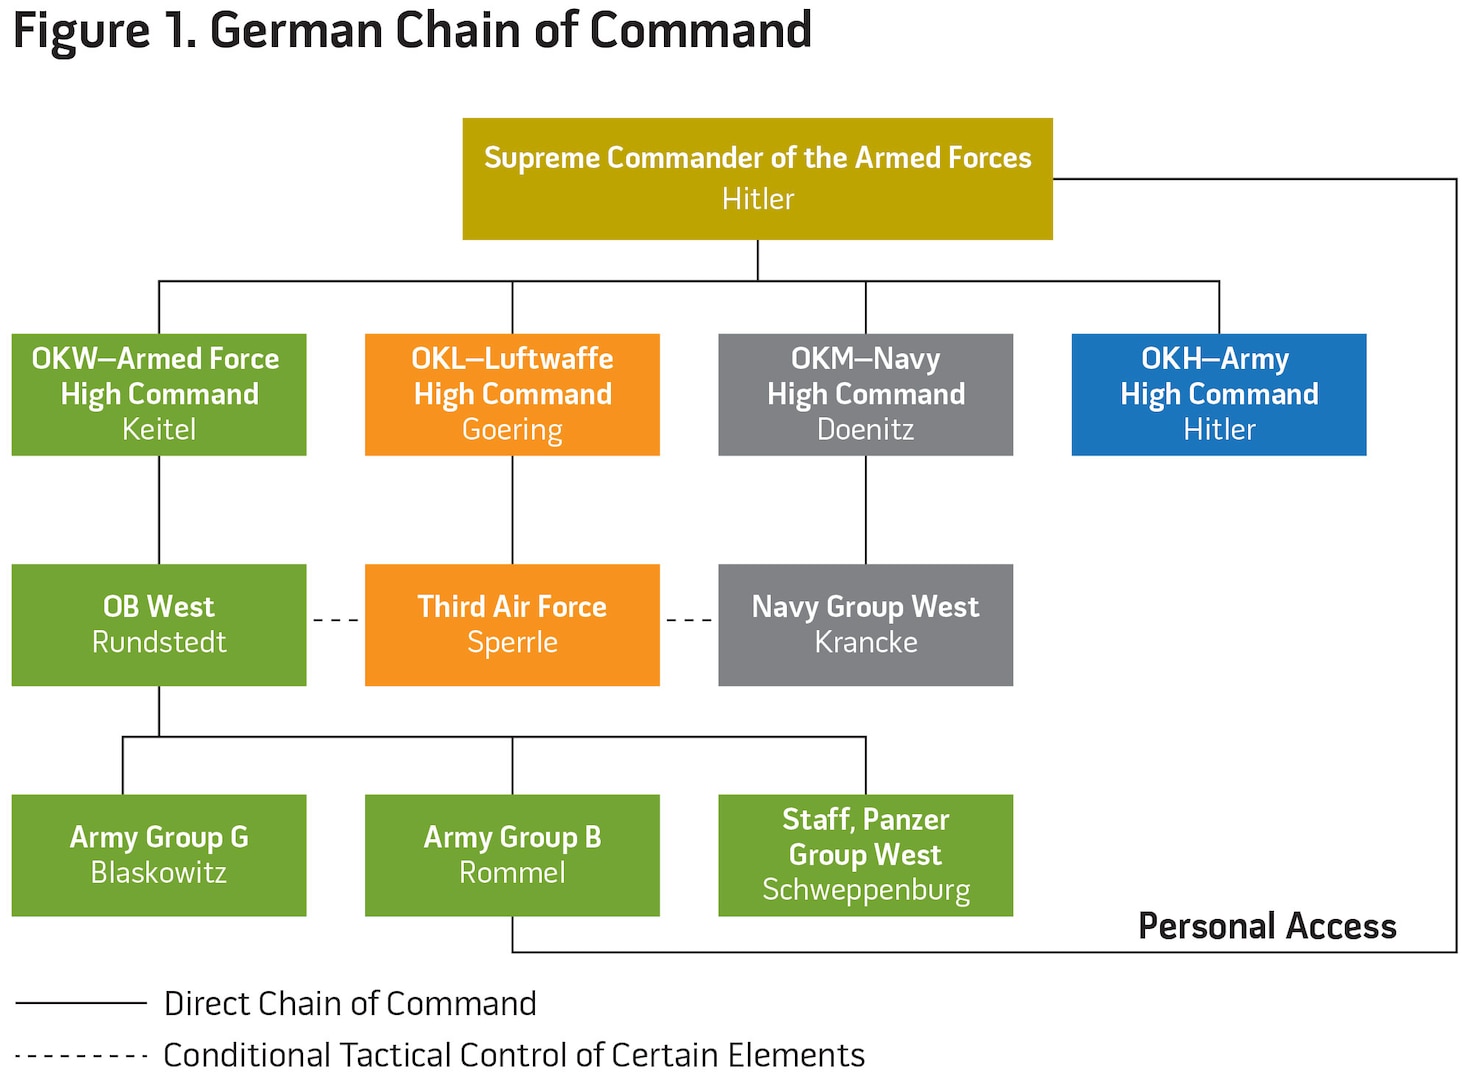 Figure 1. German Chain of Command